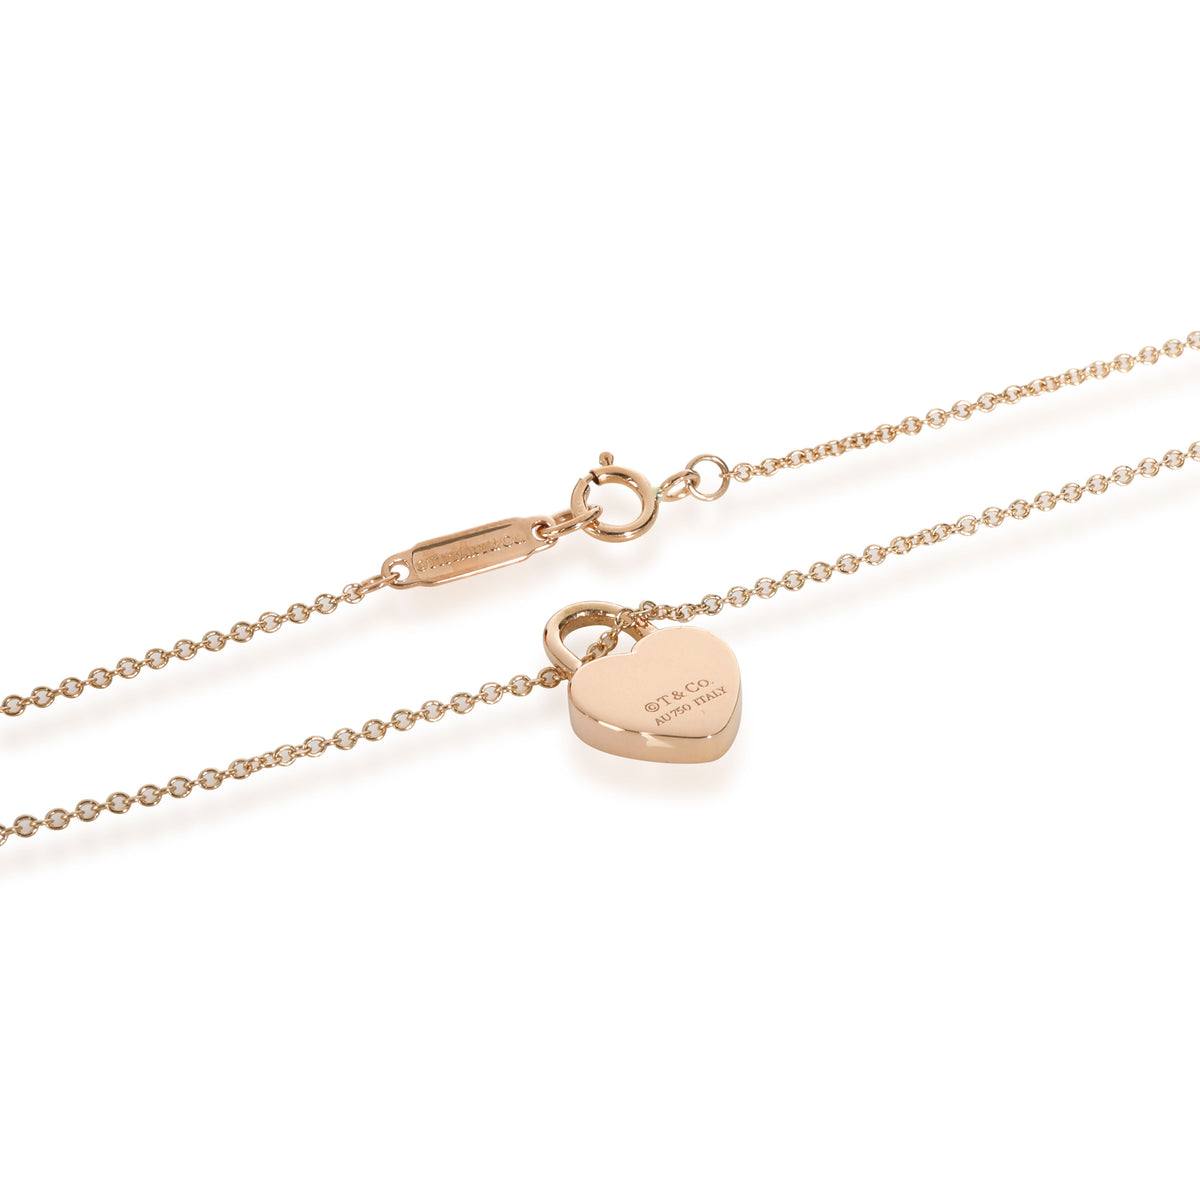 Tiffany & Co. Return to Heart Lock Pendant Necklace 18k Yellow